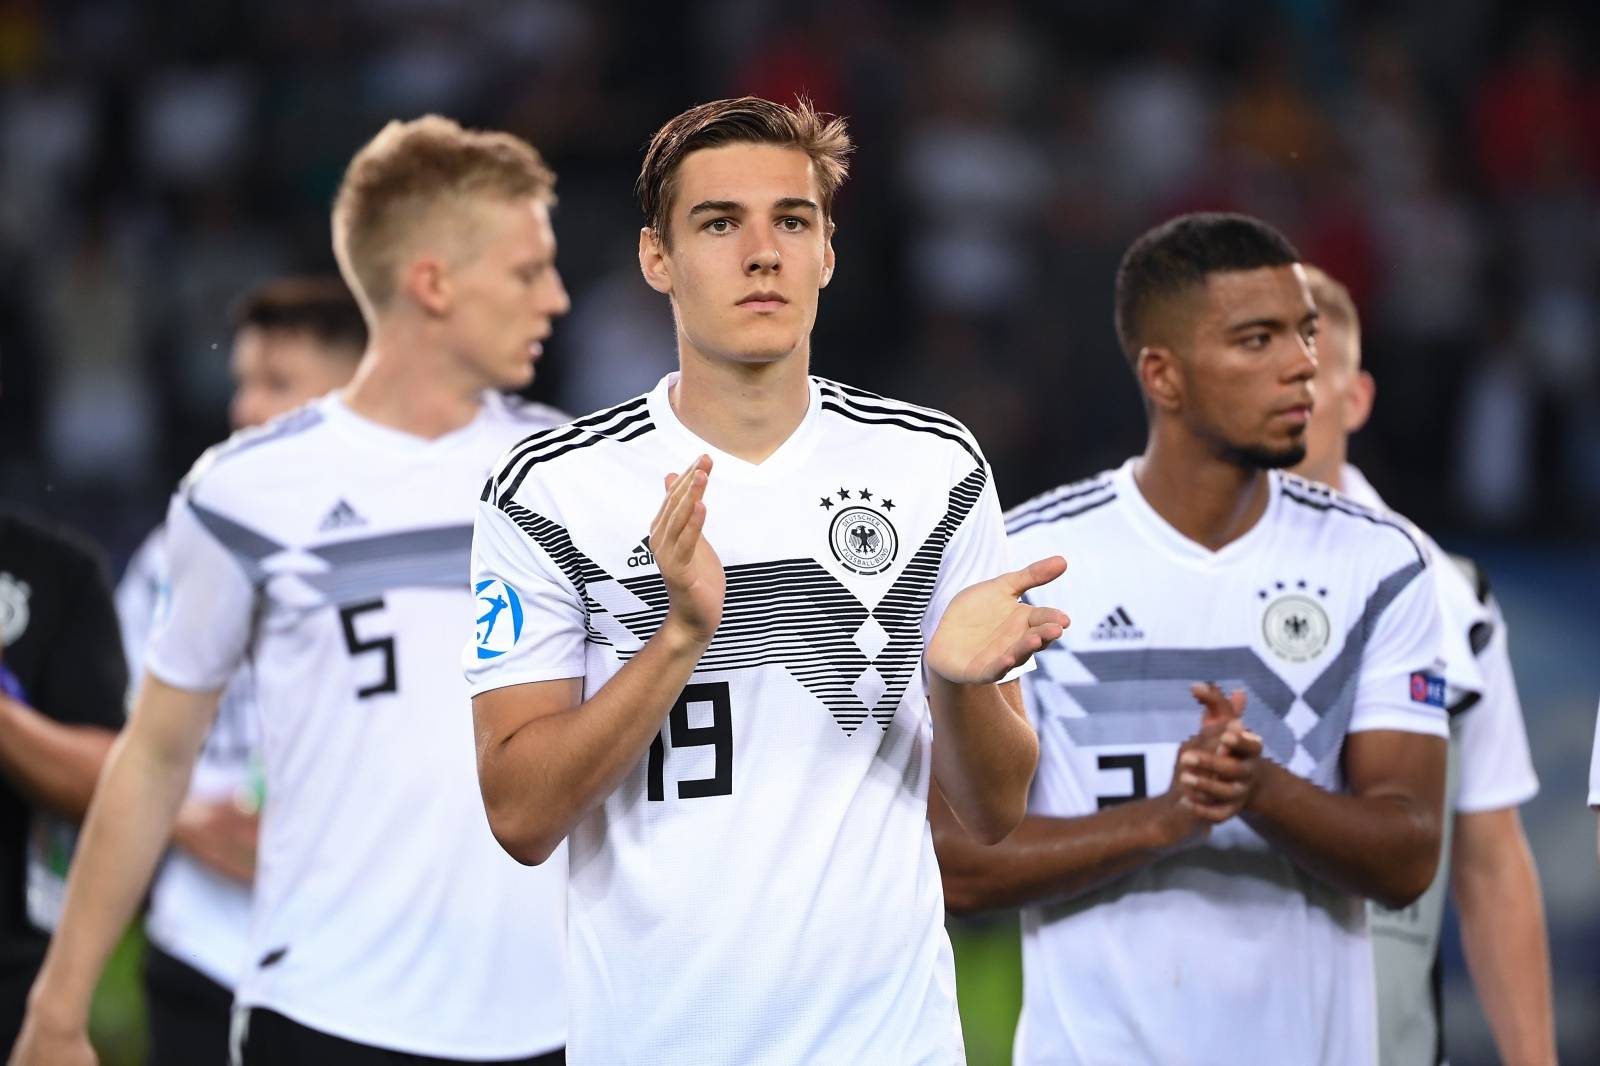 GES / football / U21 Euro: Austria -Germany, 23.06.2019